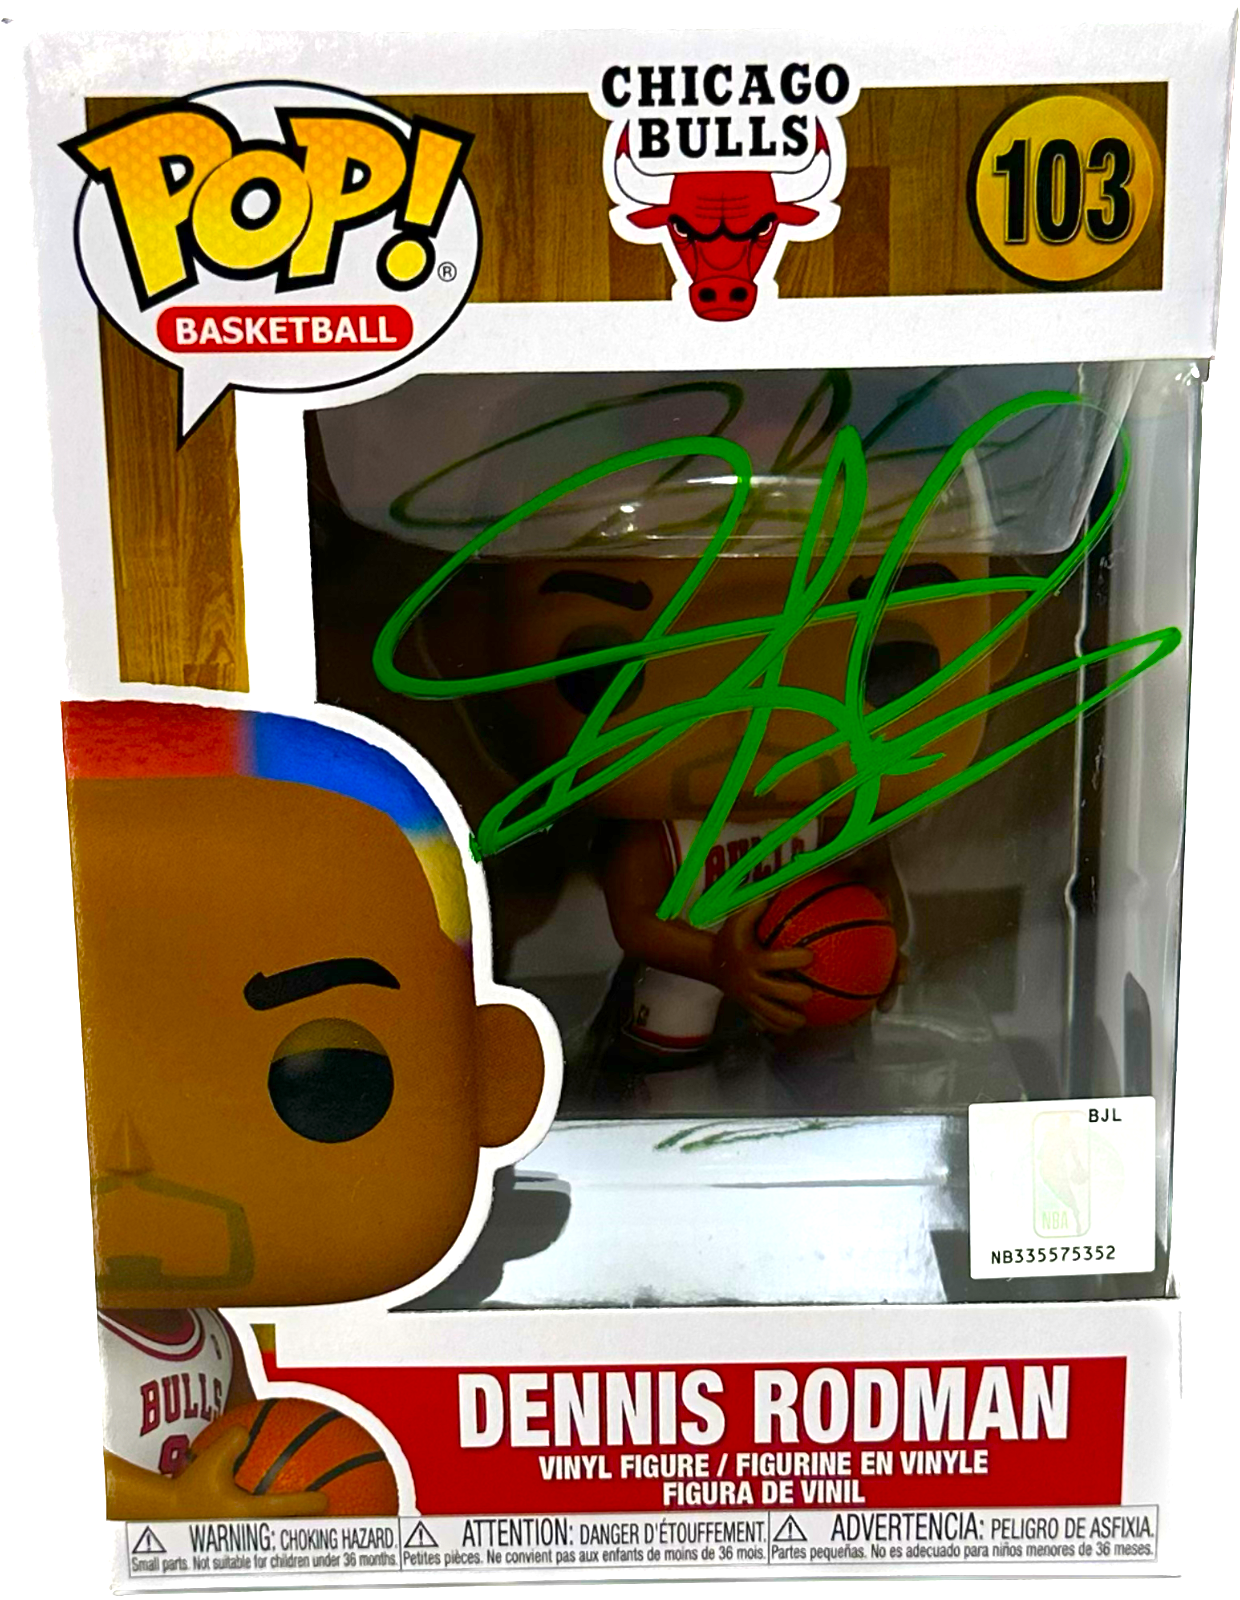 Dennis Rodman Signed autographed Funko Pop! Basketball JSA & Rodman Exclusive Hologram Authentic Green Ink Signature Authenticated By JSA ✅ - DaFunkoShop - 